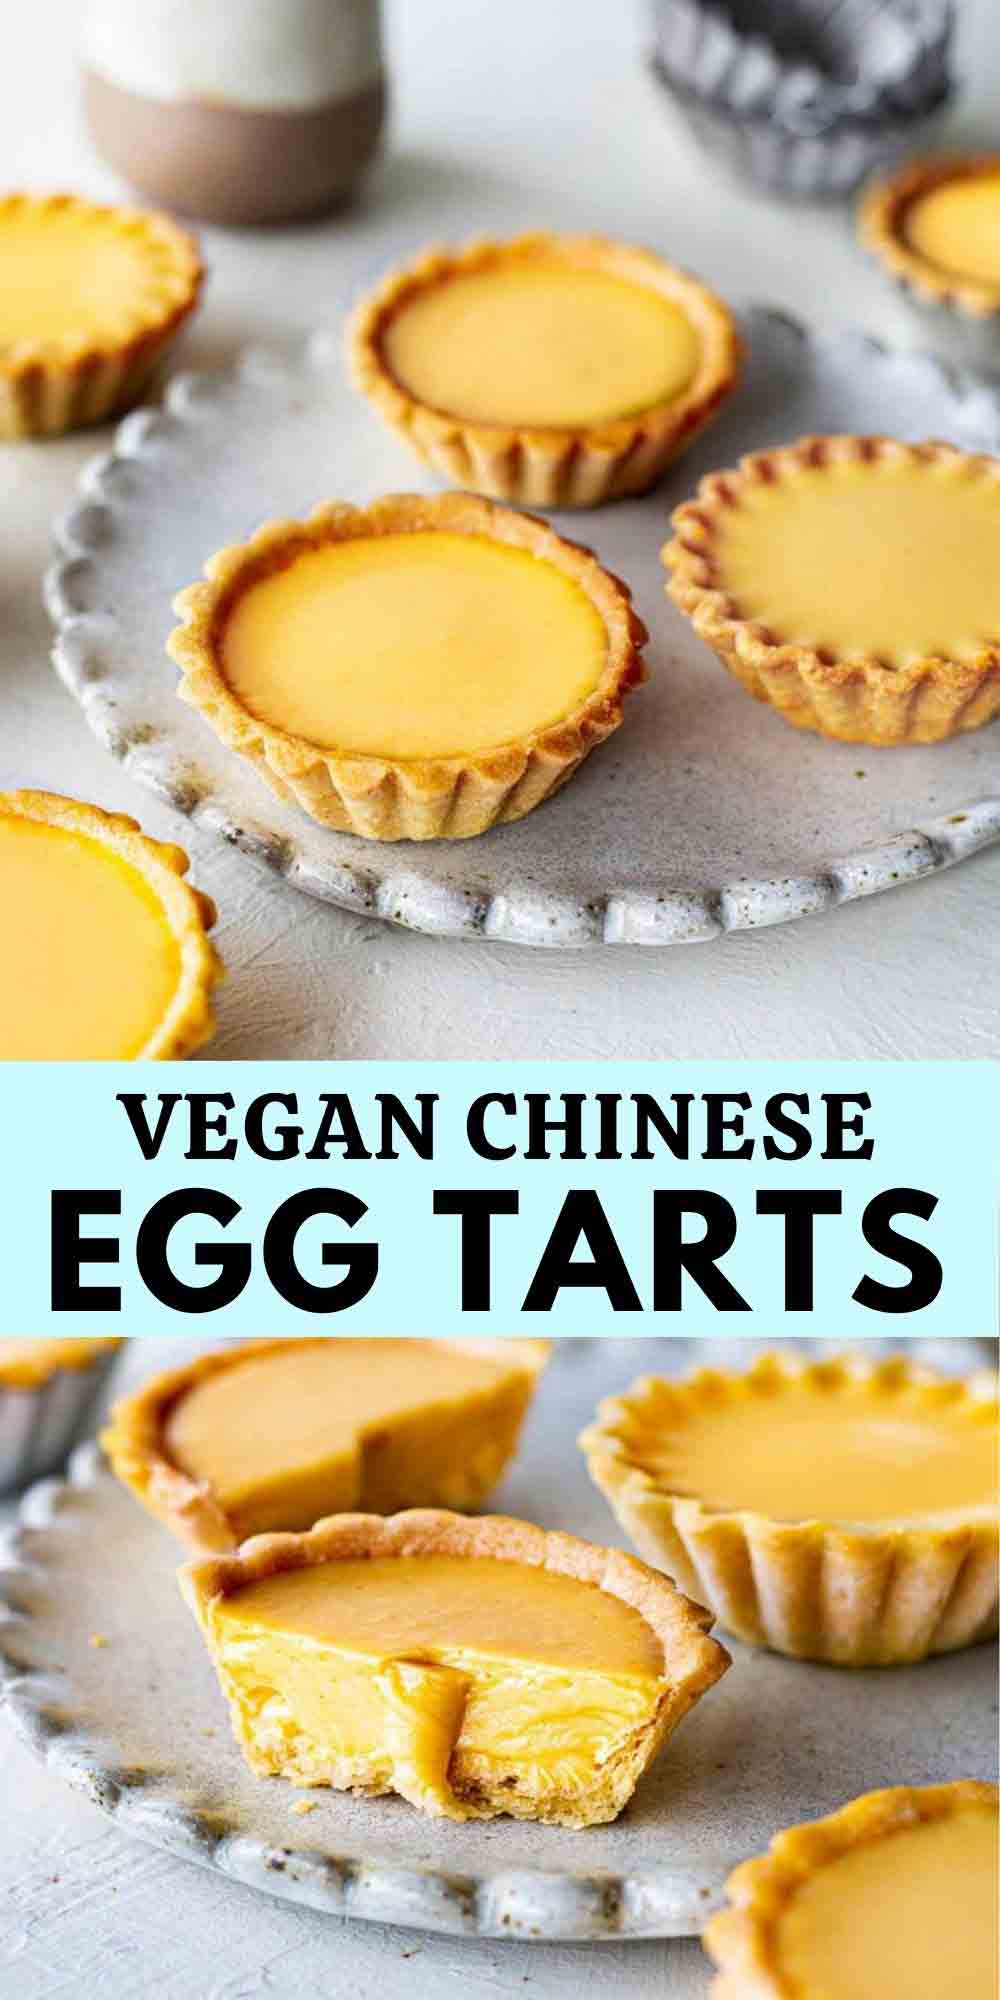 Vegan Egg Tarts (Hong Kong style)